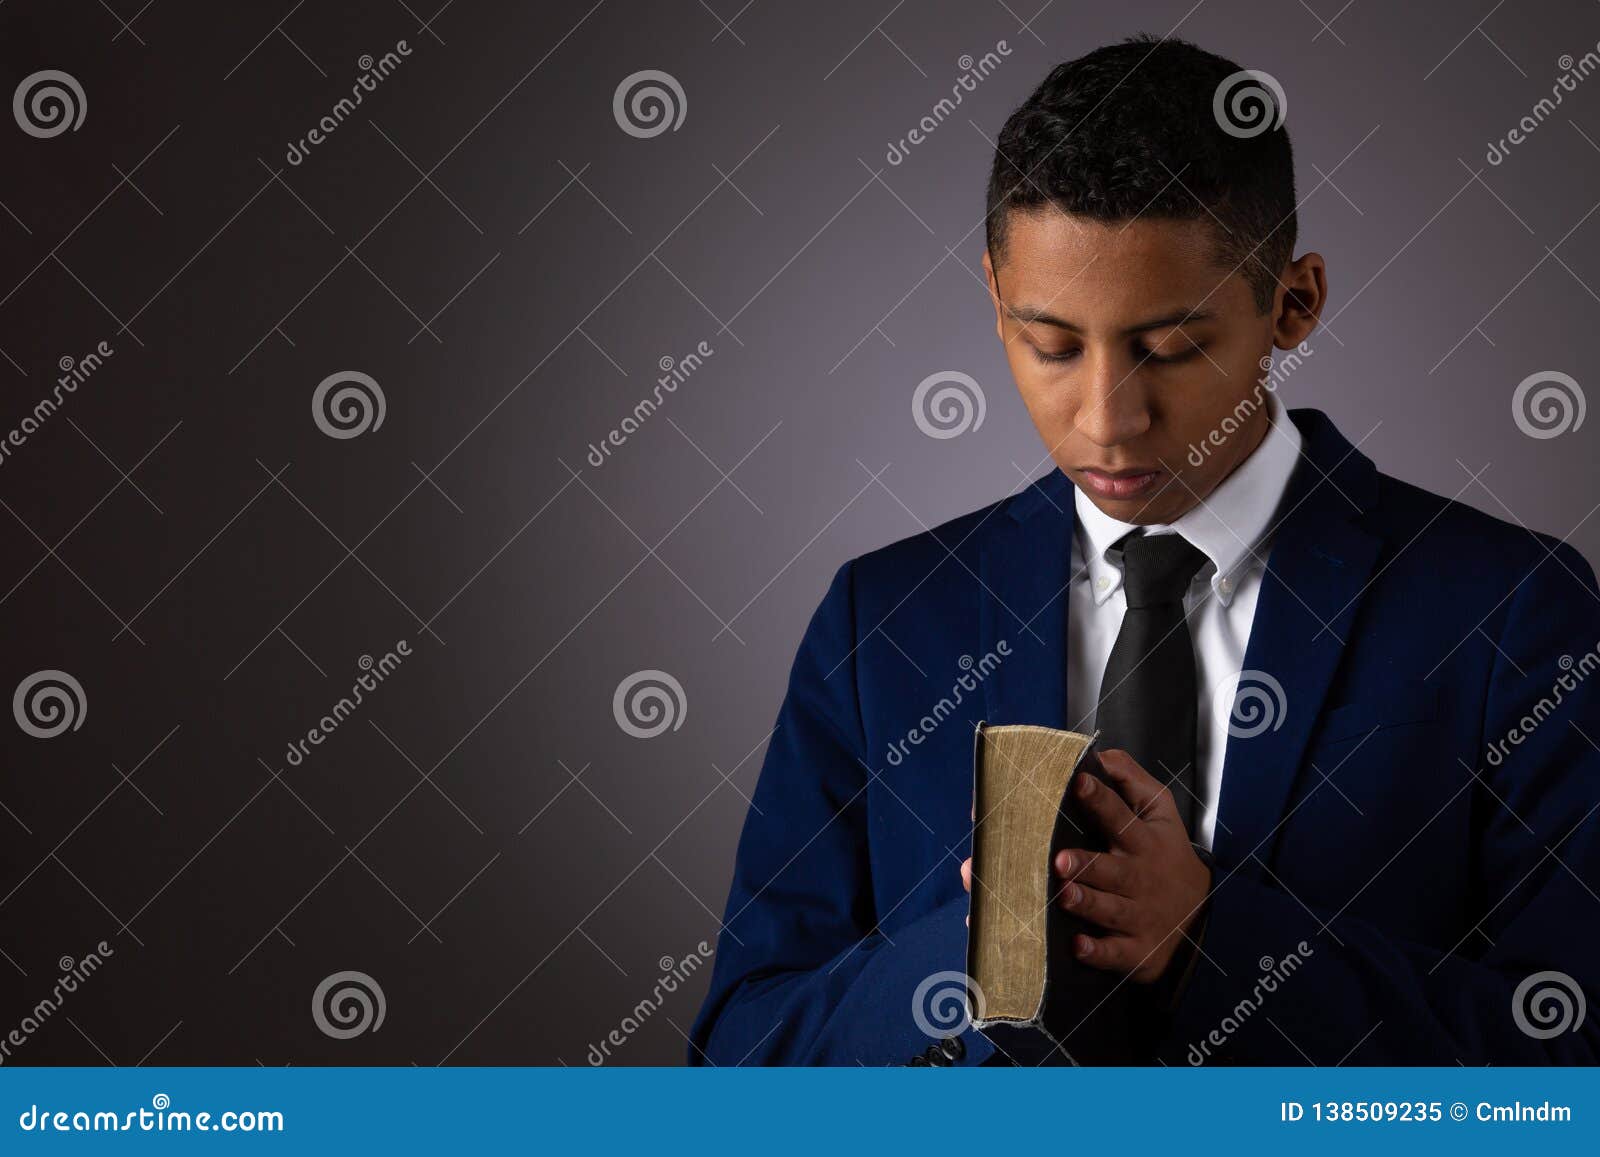 hispanic teenager boy seeking to commune with god via prayer and holding the holy bible